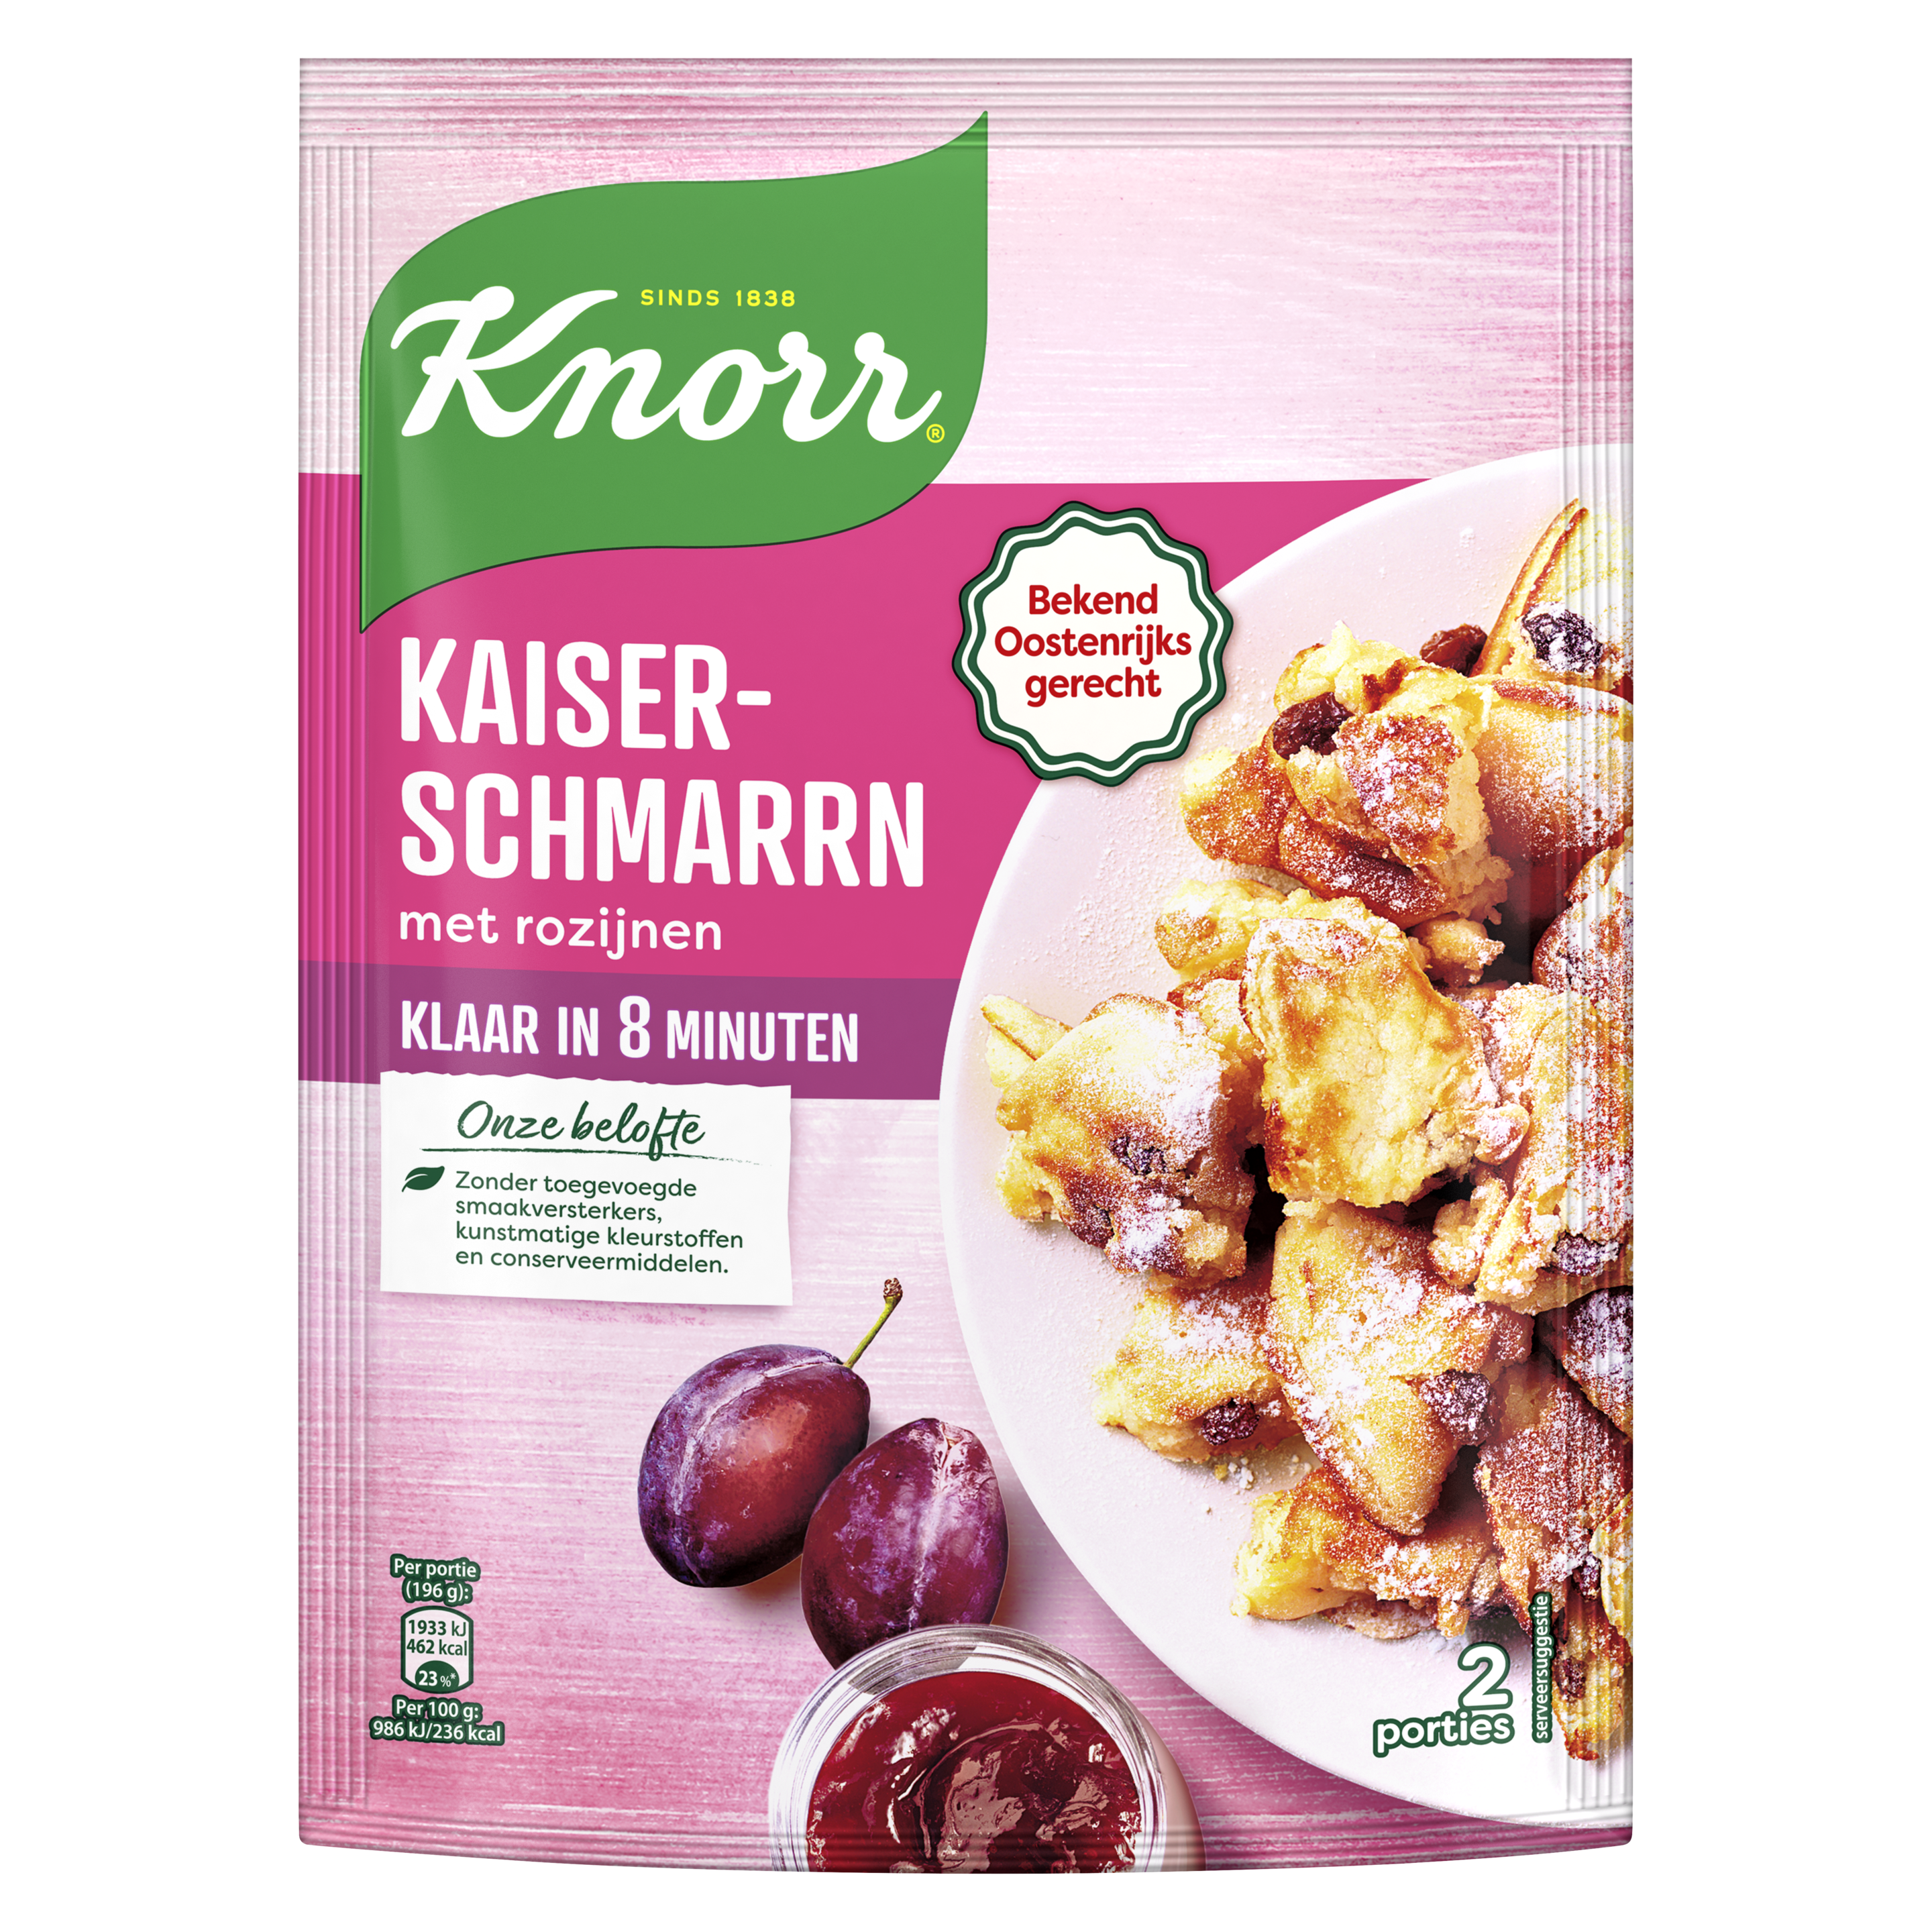 Kaiserschmarrn product